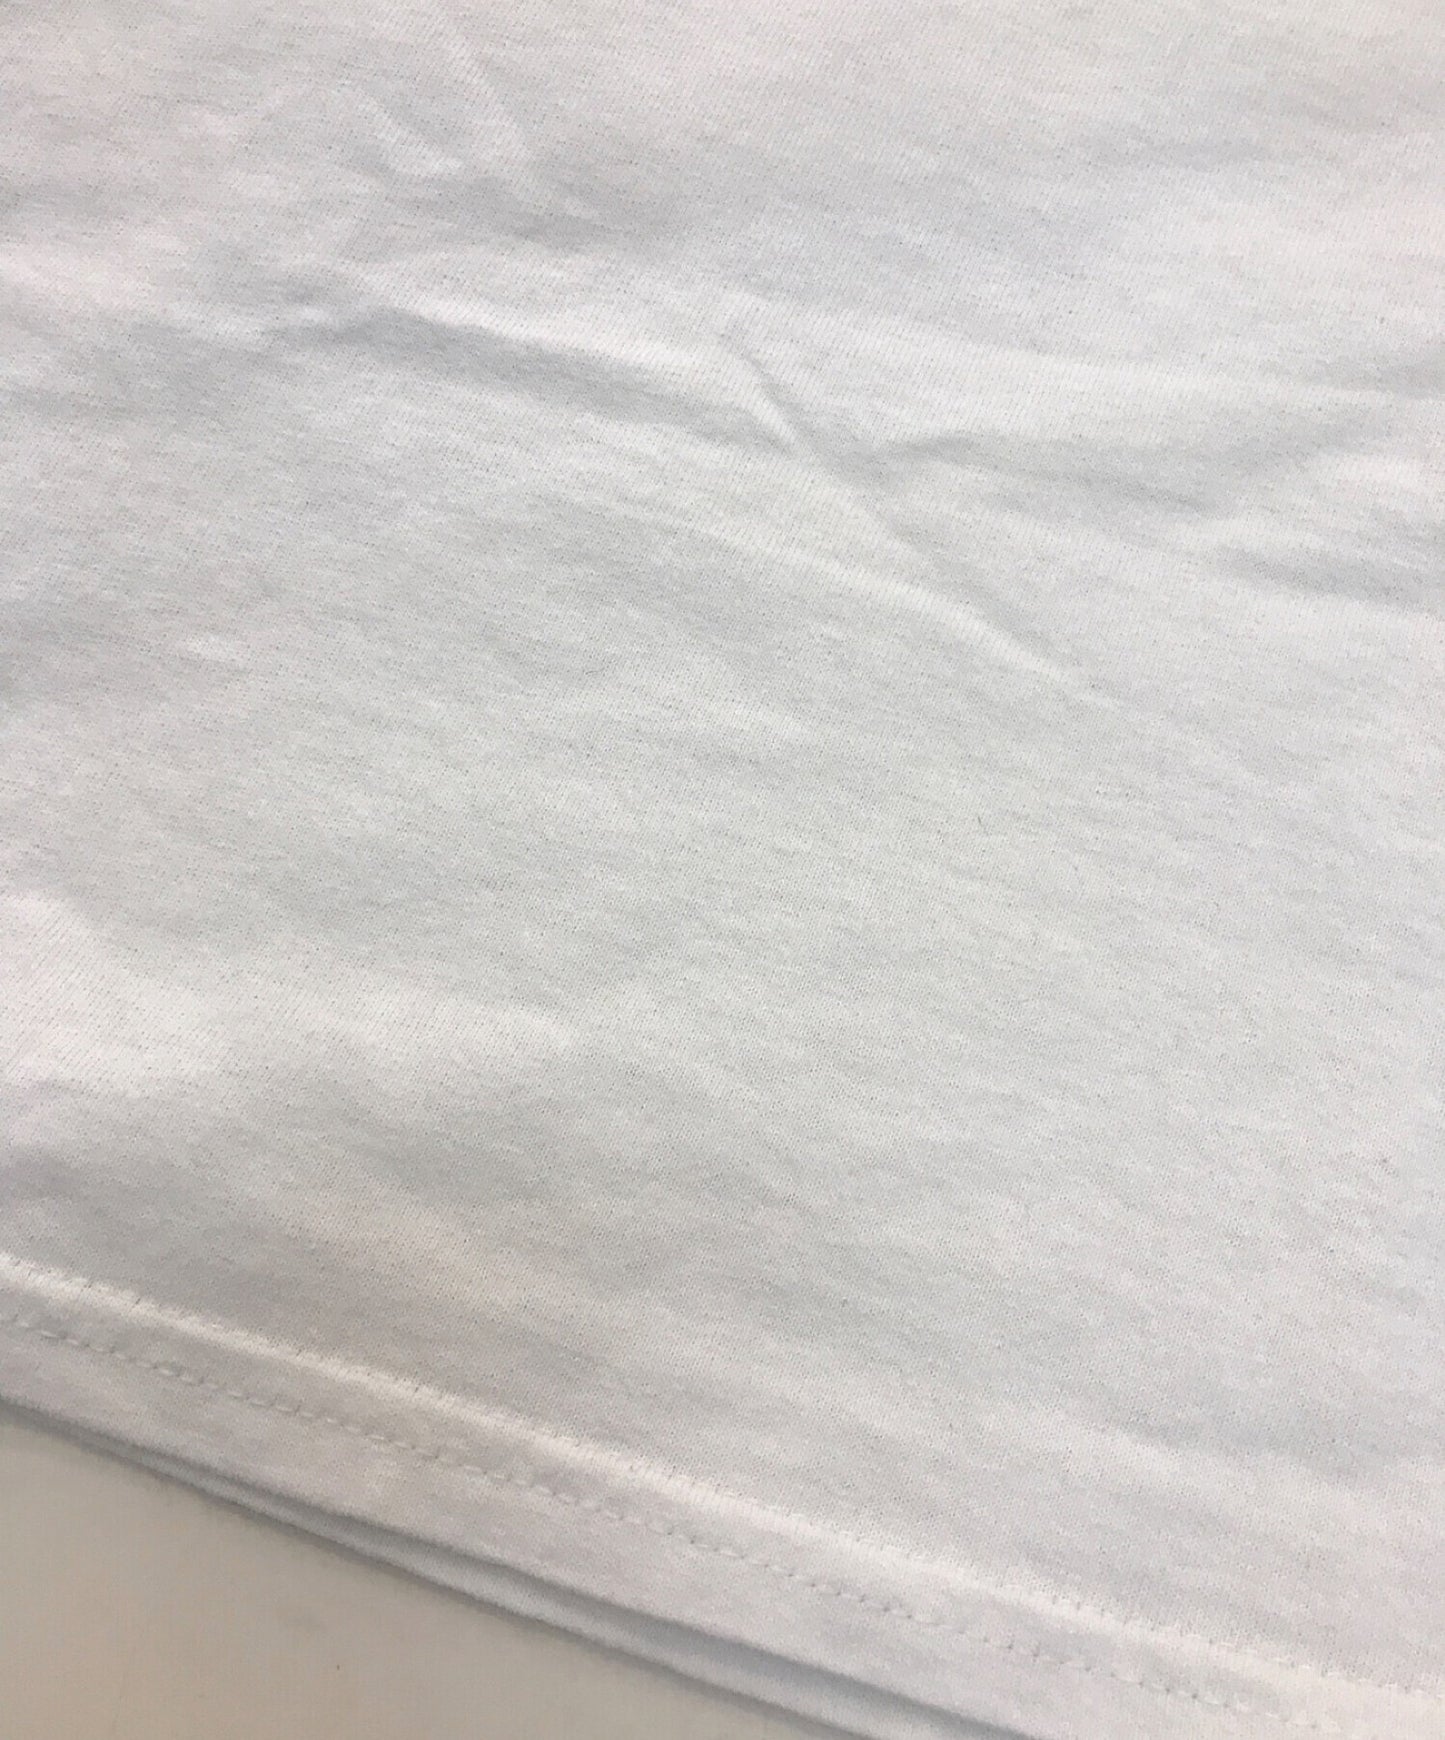 [Pre-owned] THUNDERBOLT PROJECT Printed T-shirt Raichu fragment&POKEMON